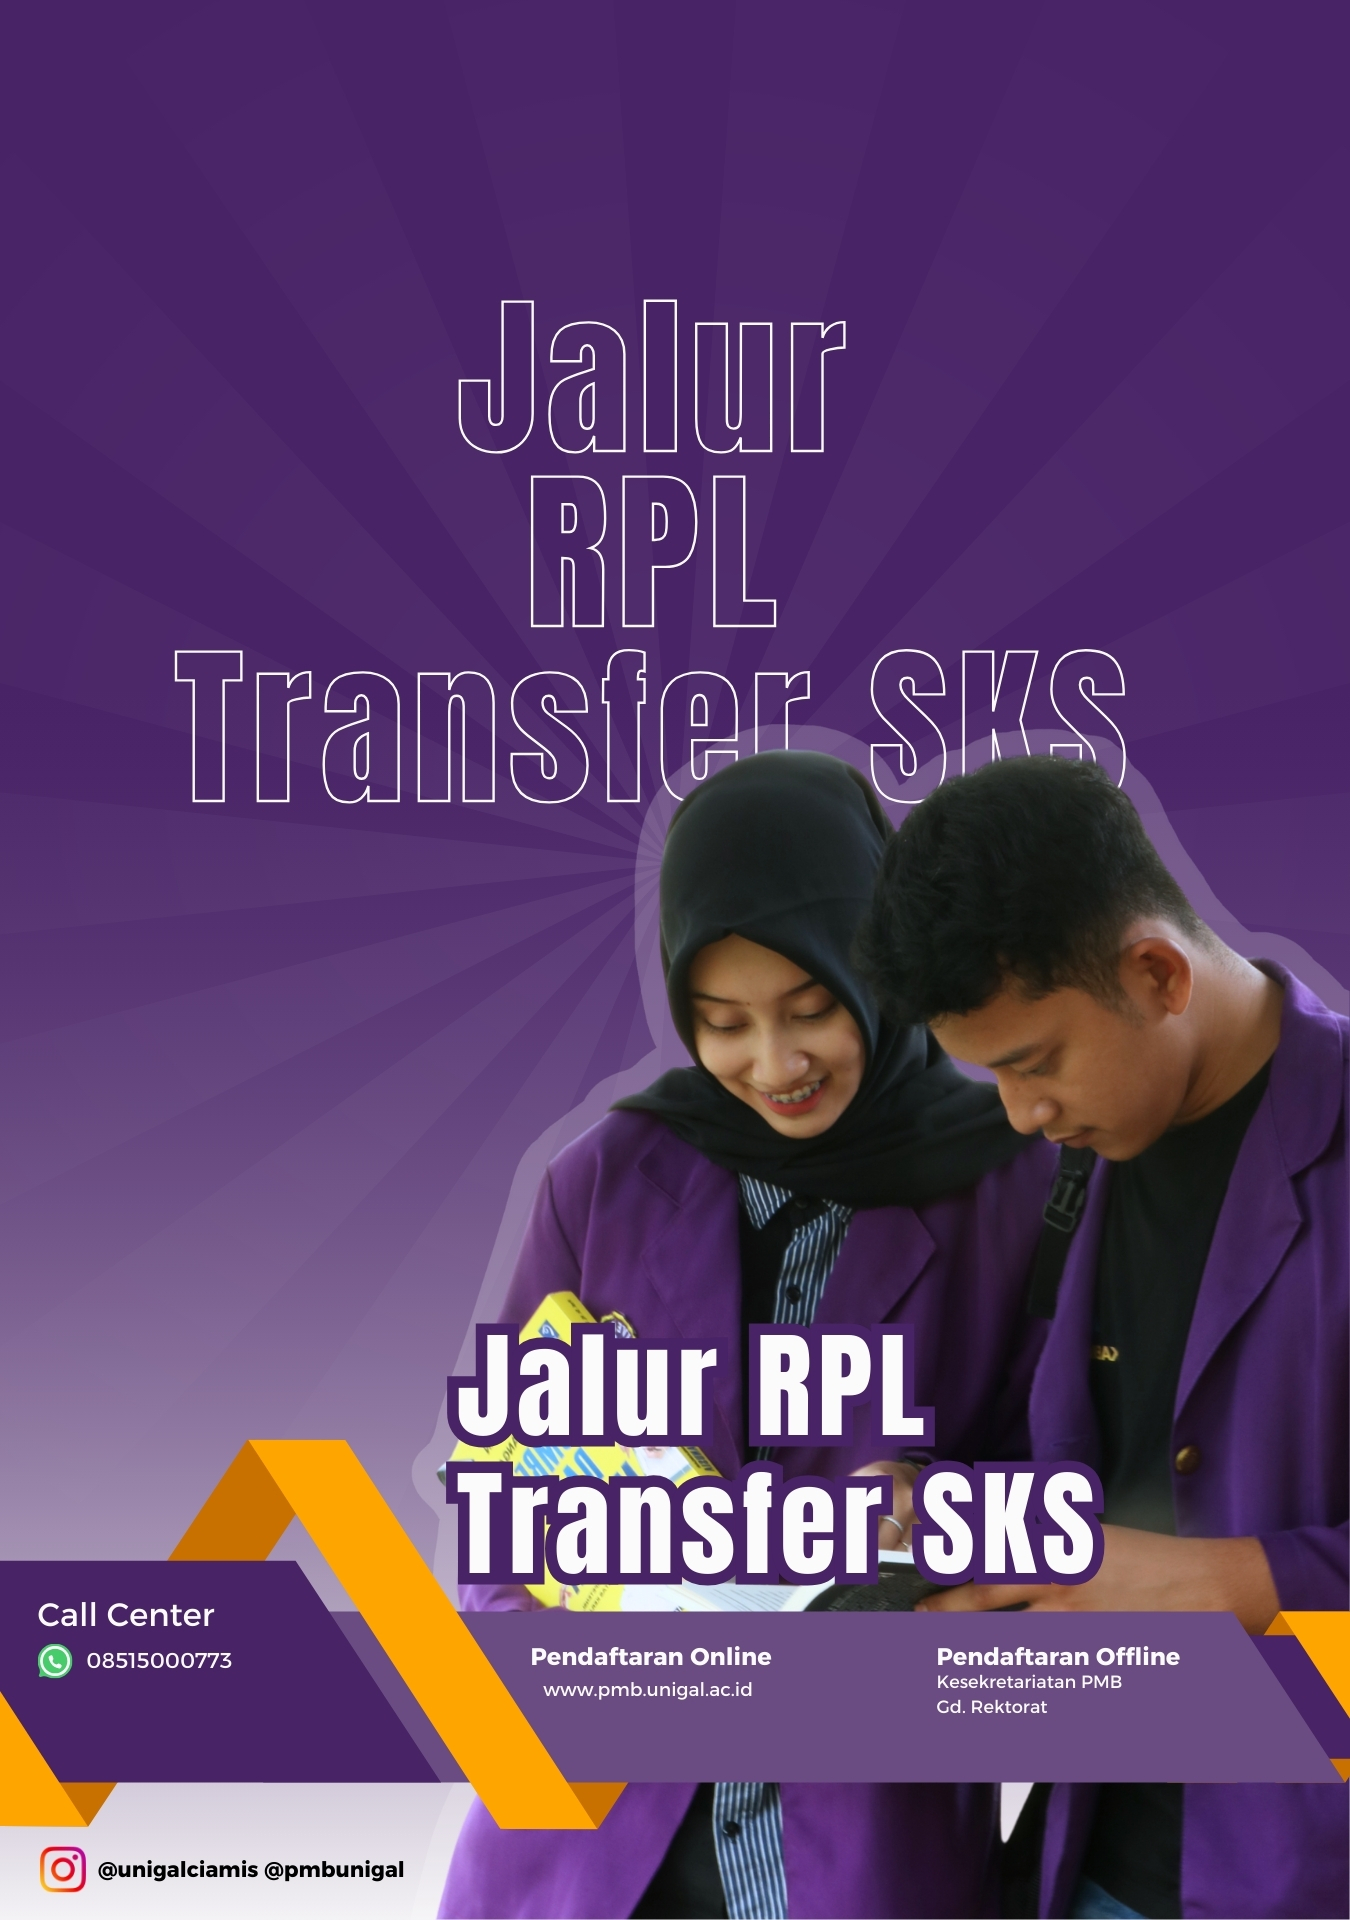 Jalur RPL Transfer SKS